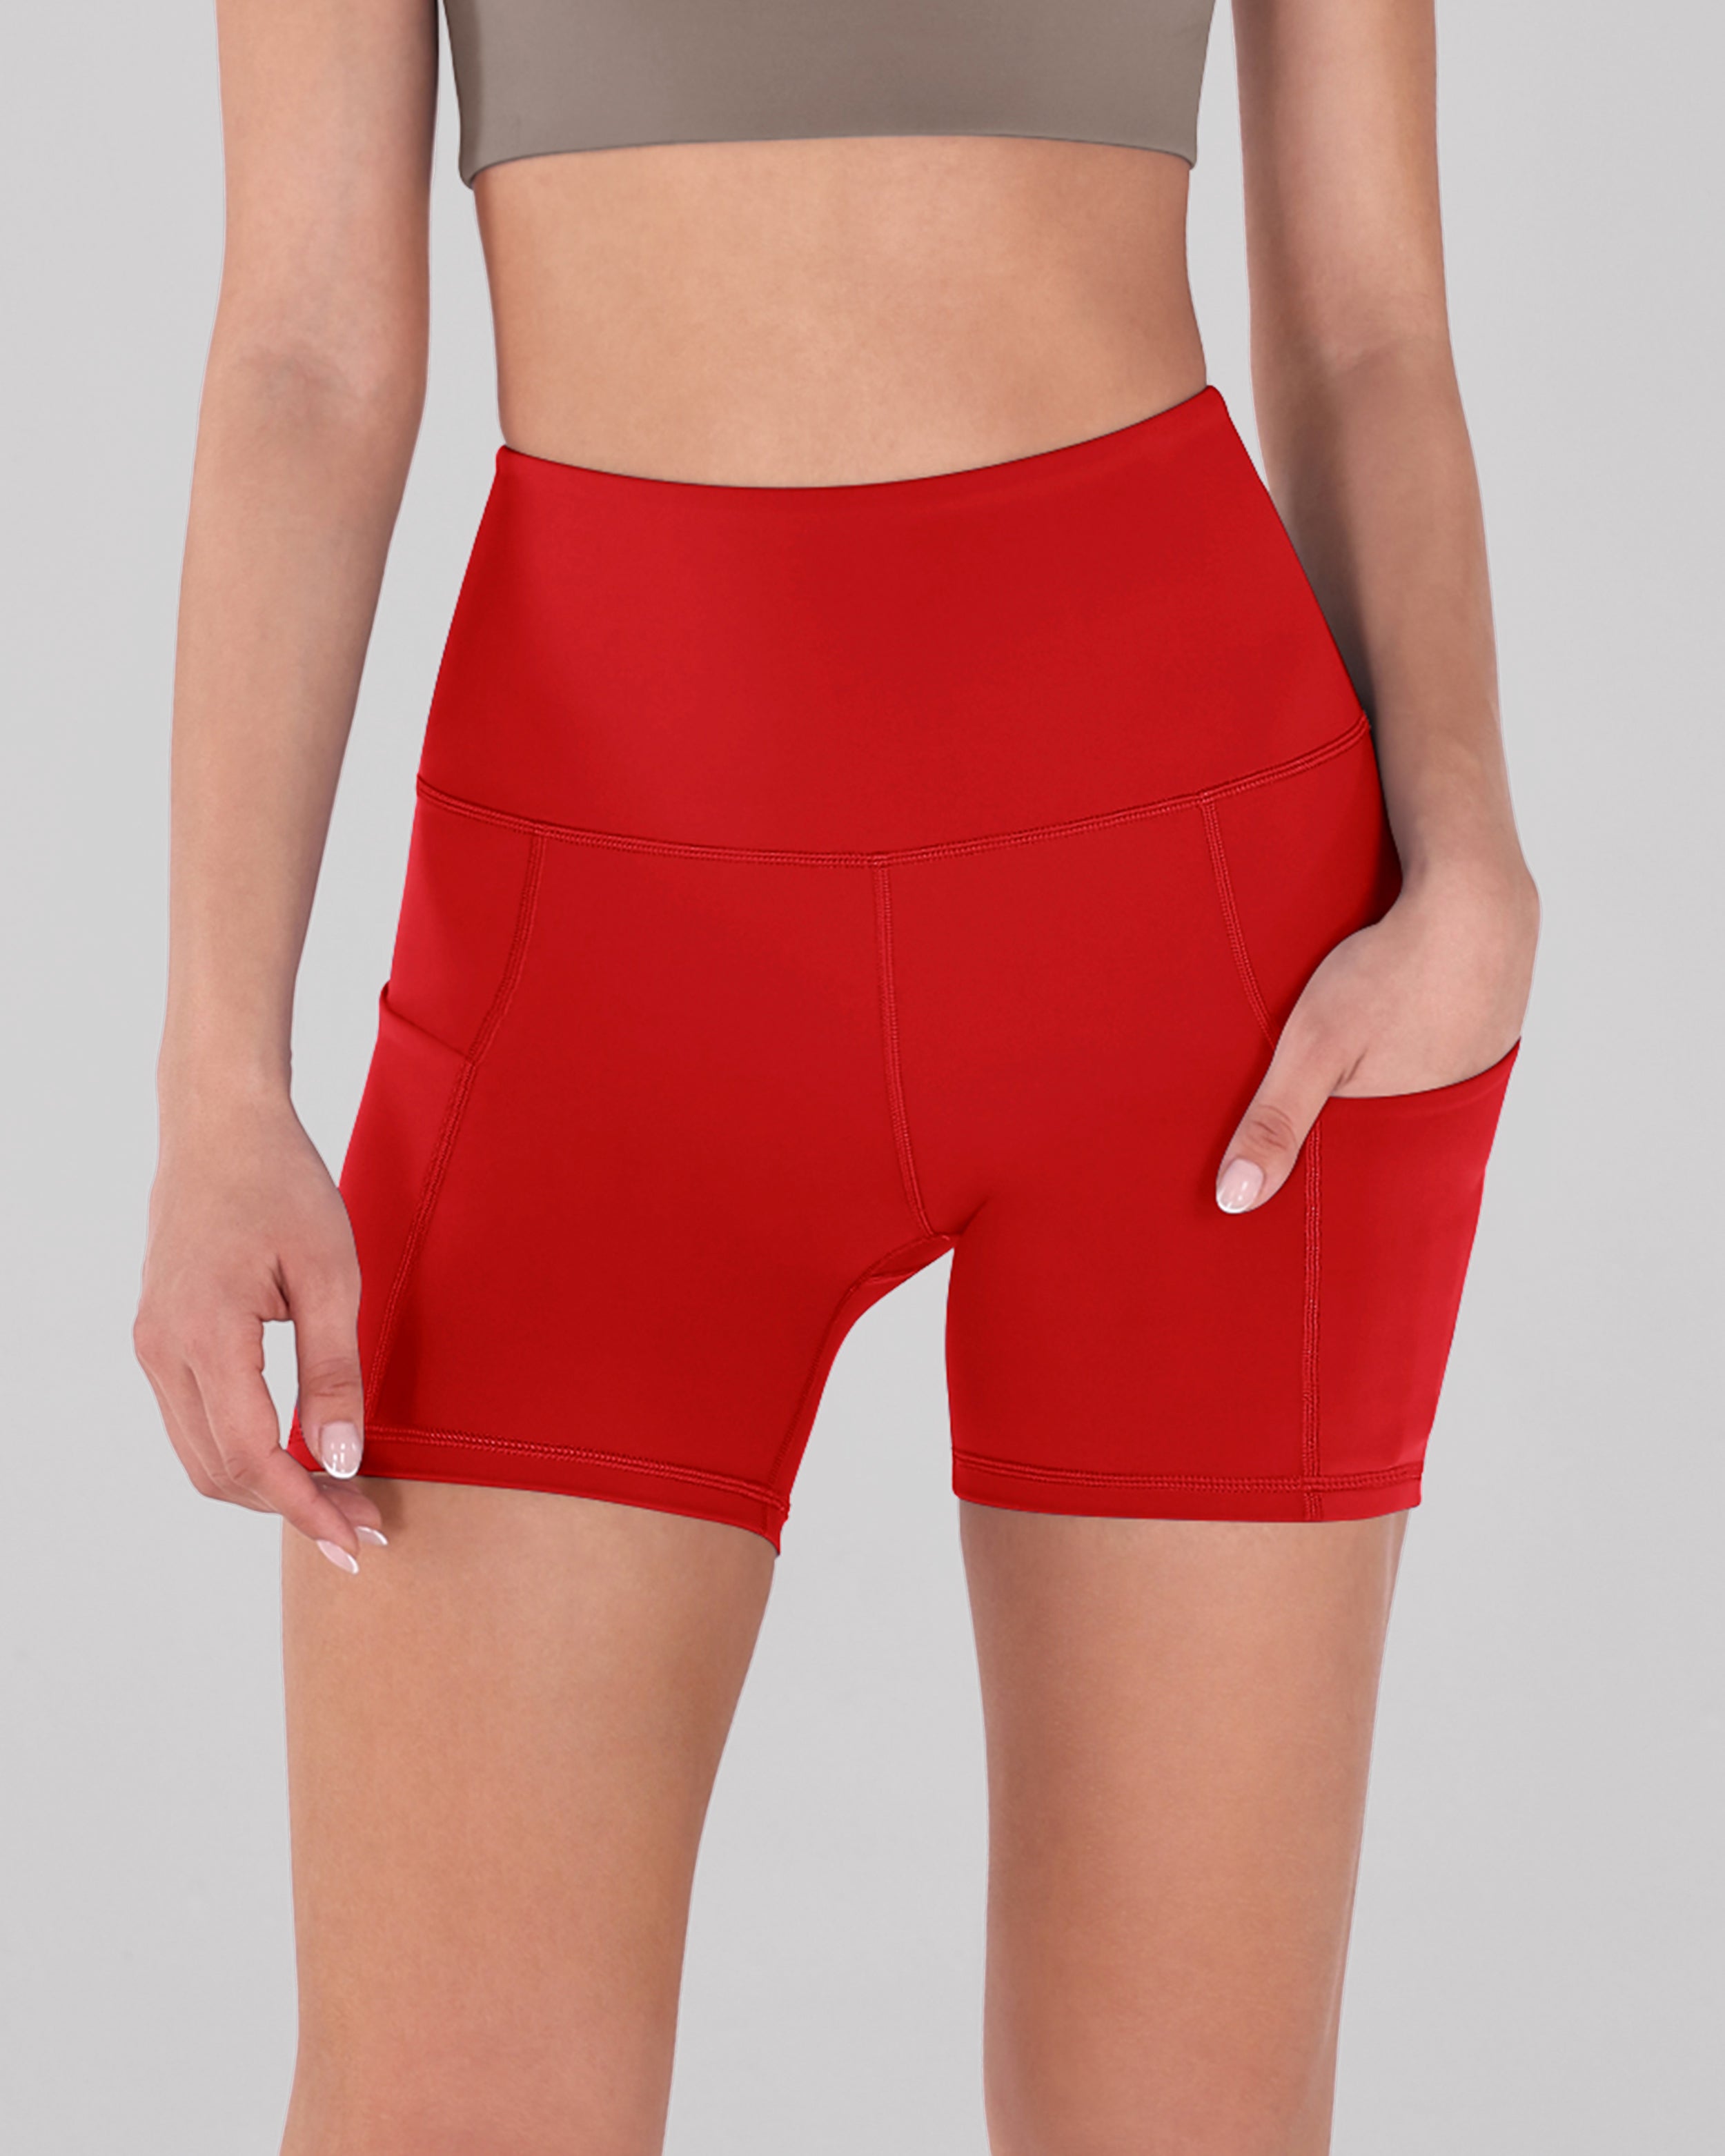 5" High Waist Tummy Control Shorts with Pockets Red - ododos